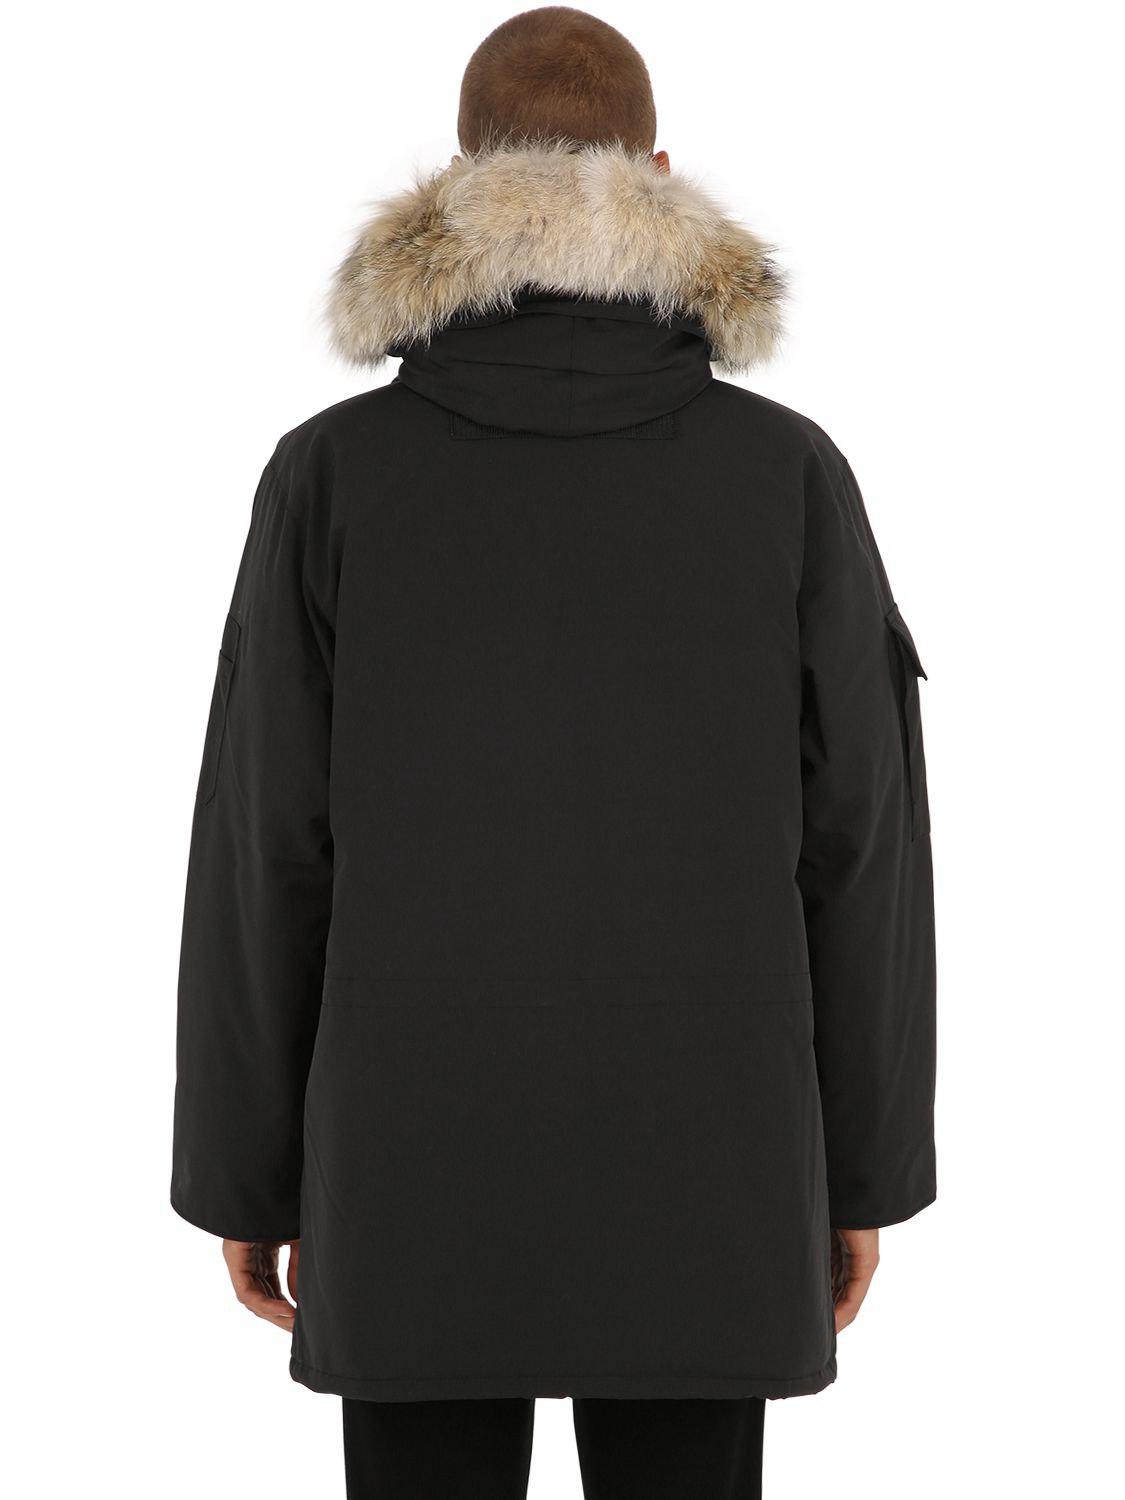 Canada Goose Expedition Fur Trim Parka in Black for Men - Lyst